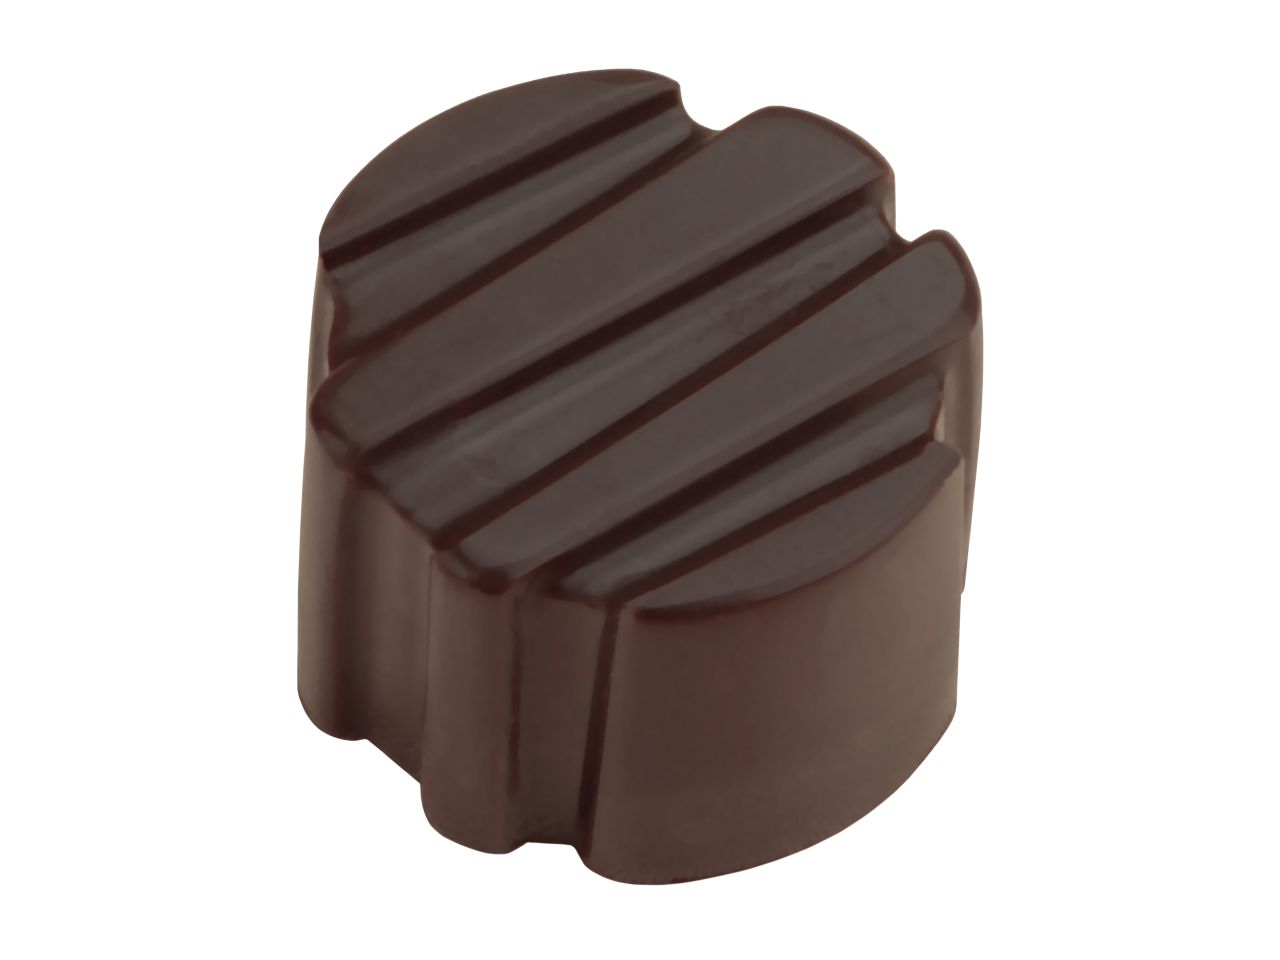 Schokoladenform: Modern, Kunststoff, transparent, 21 Mulden à 26 x 20 mm